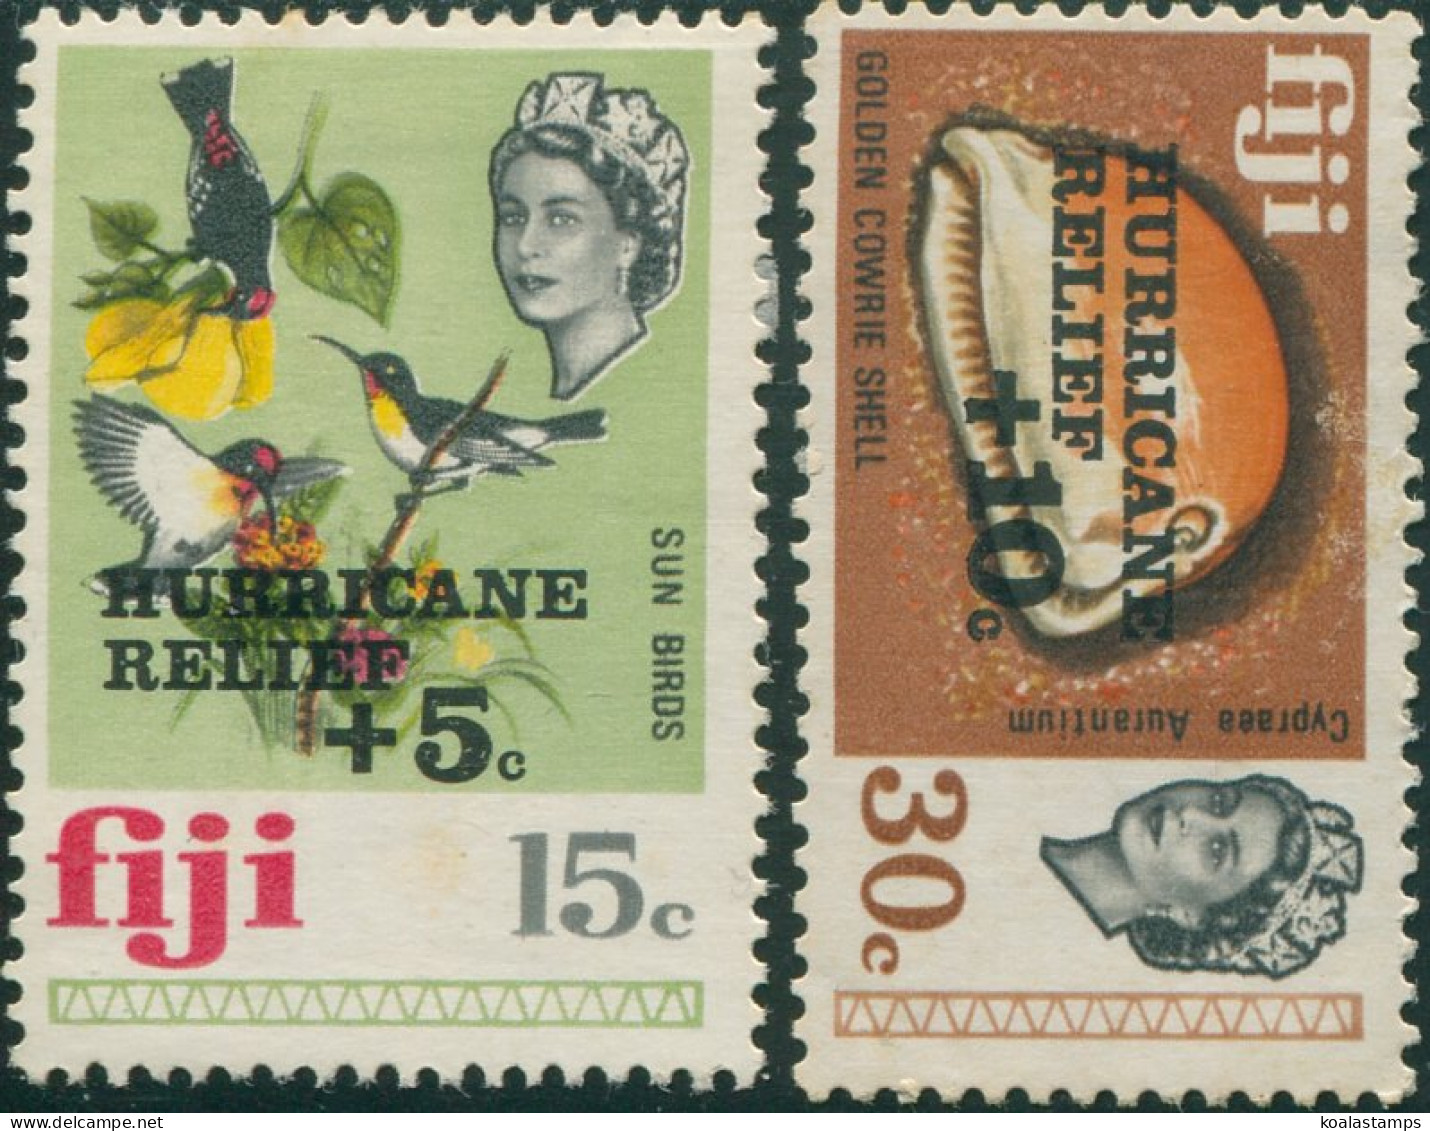 Fiji 1972 SG476-477 Birds Shell HURRICANE RELIEF Set MNH - Fidji (1970-...)